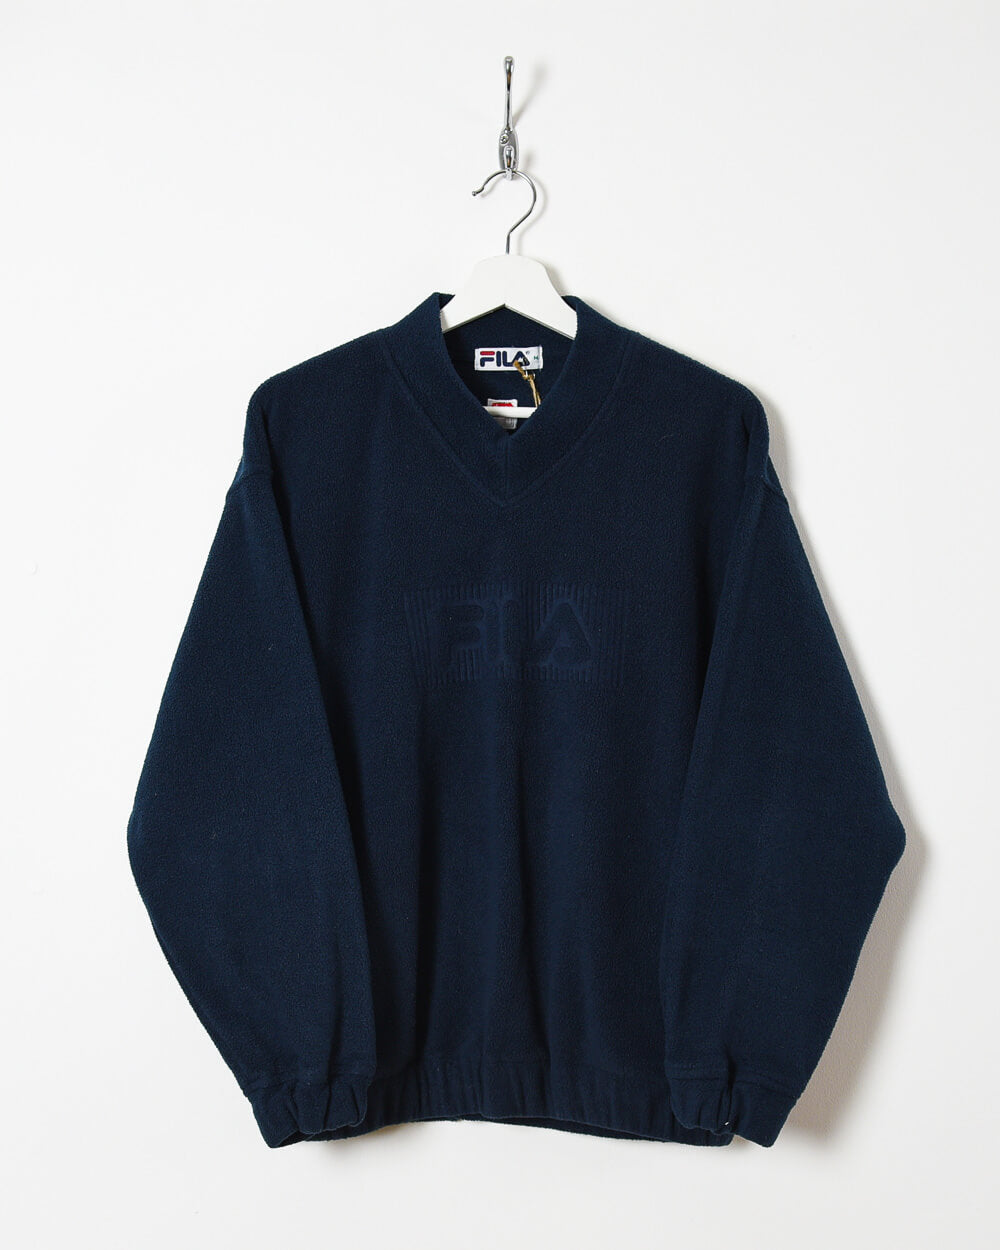 Fila Pullover Fleece - Medium - Domno Vintage 90s, 80s, 00s Retro and Vintage Clothing 